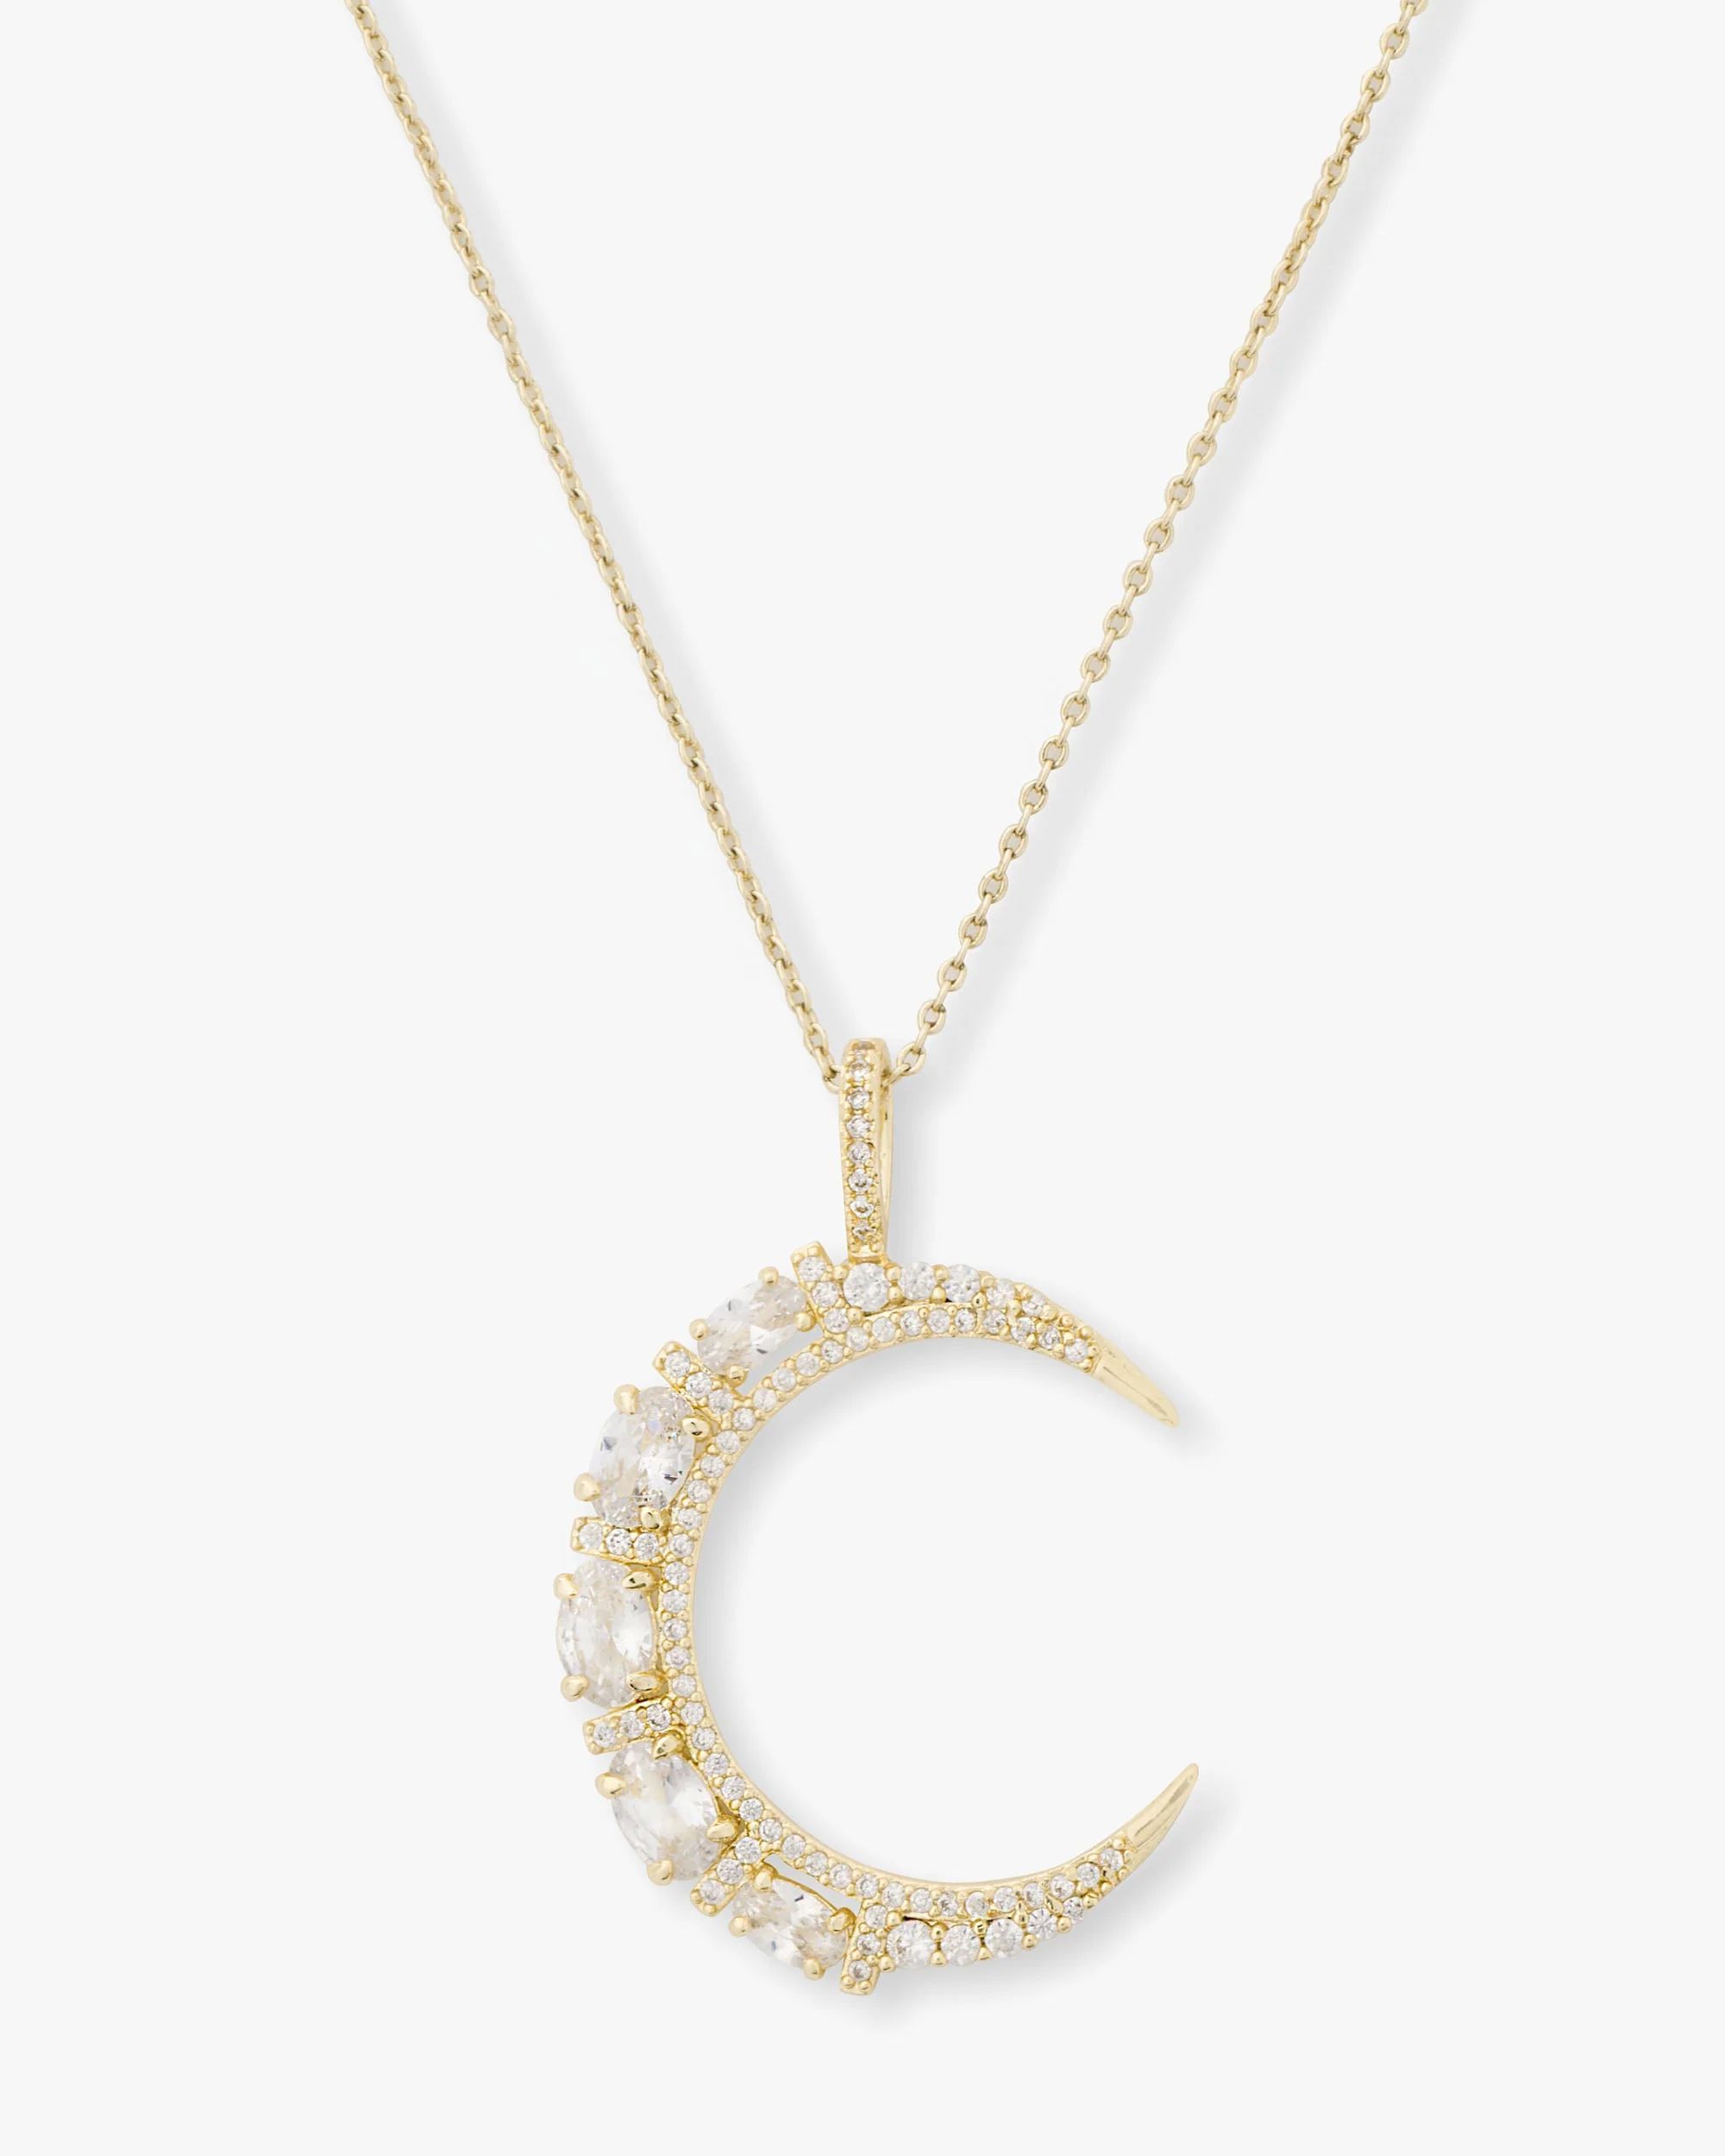 She's an Icon Moon Necklace - Gold|White Diamondettes | Melinda Maria